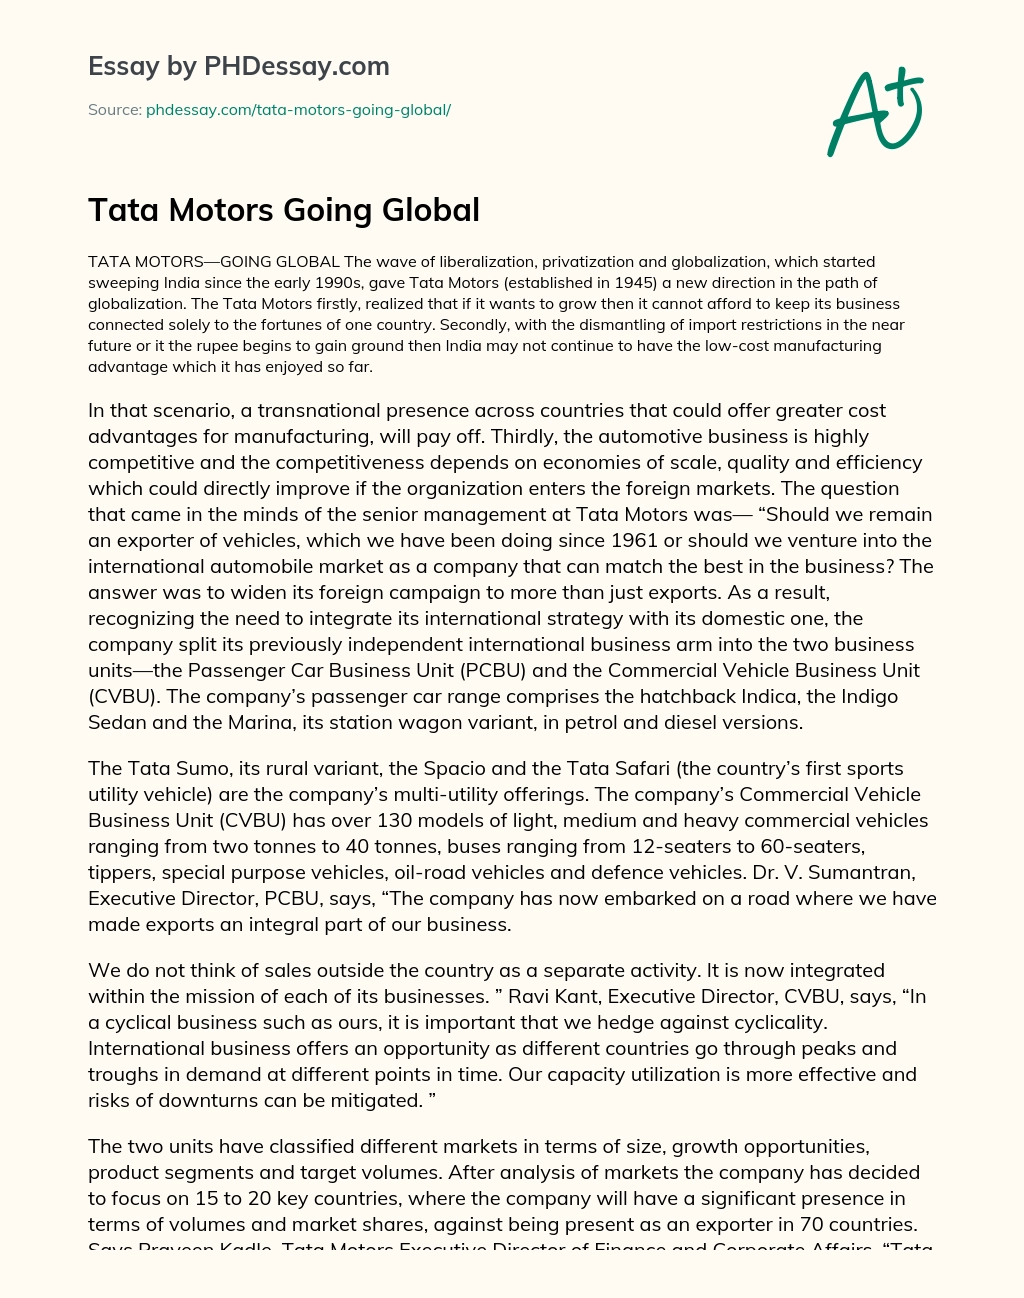 Tata Motors Going Global essay